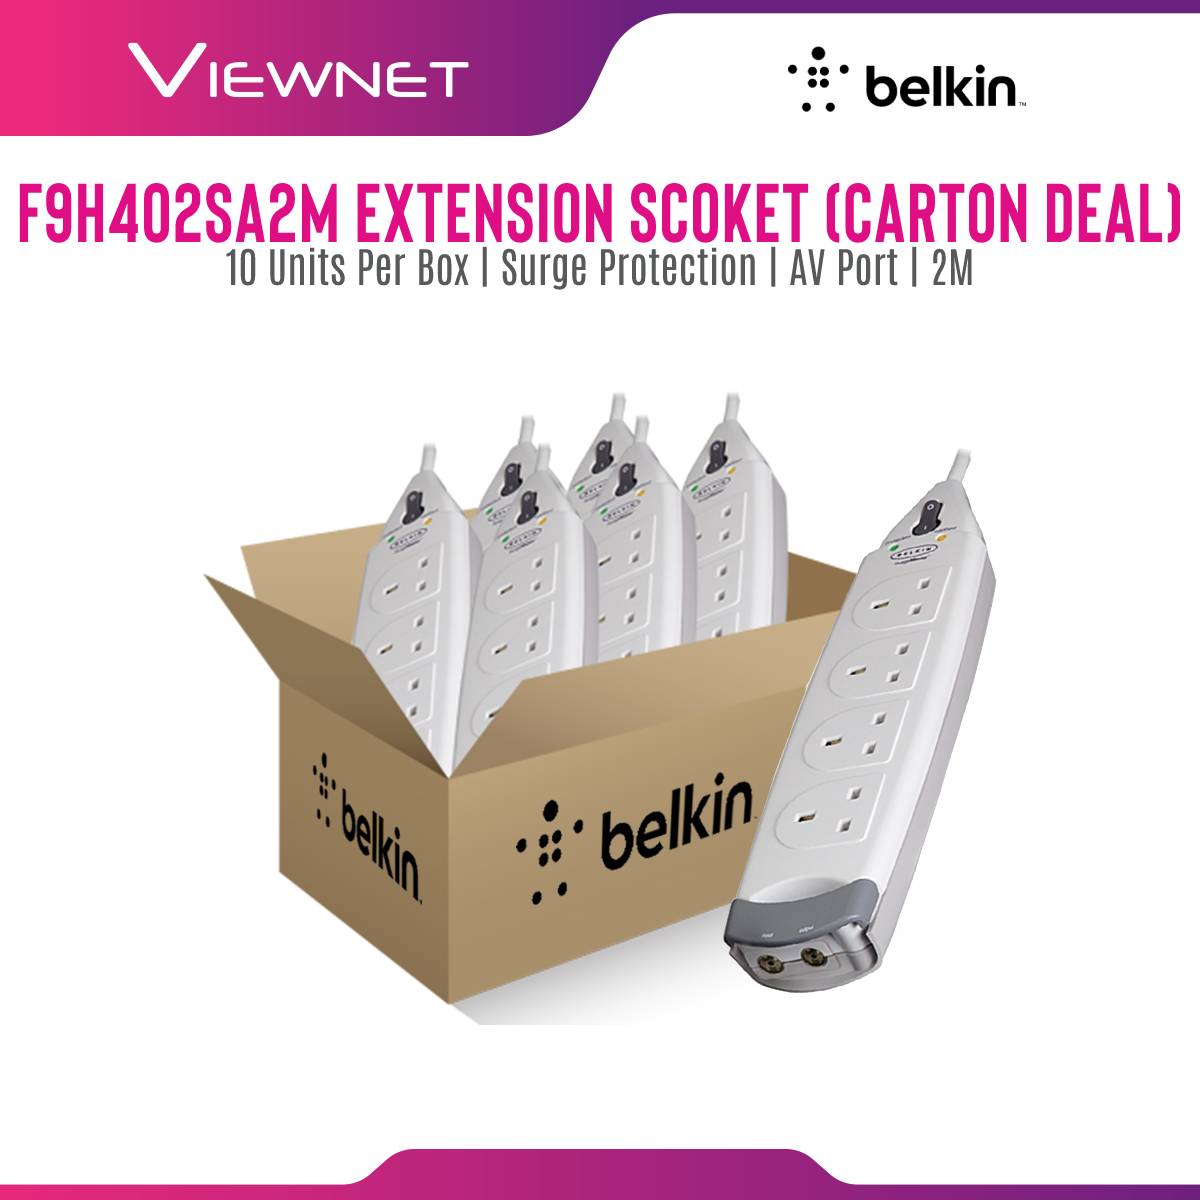 [Carton Deal] Belkin F9H402sa2M-MY 4 Way Surge With Ariel Protection - 2 Meter (10 Units Per Box)